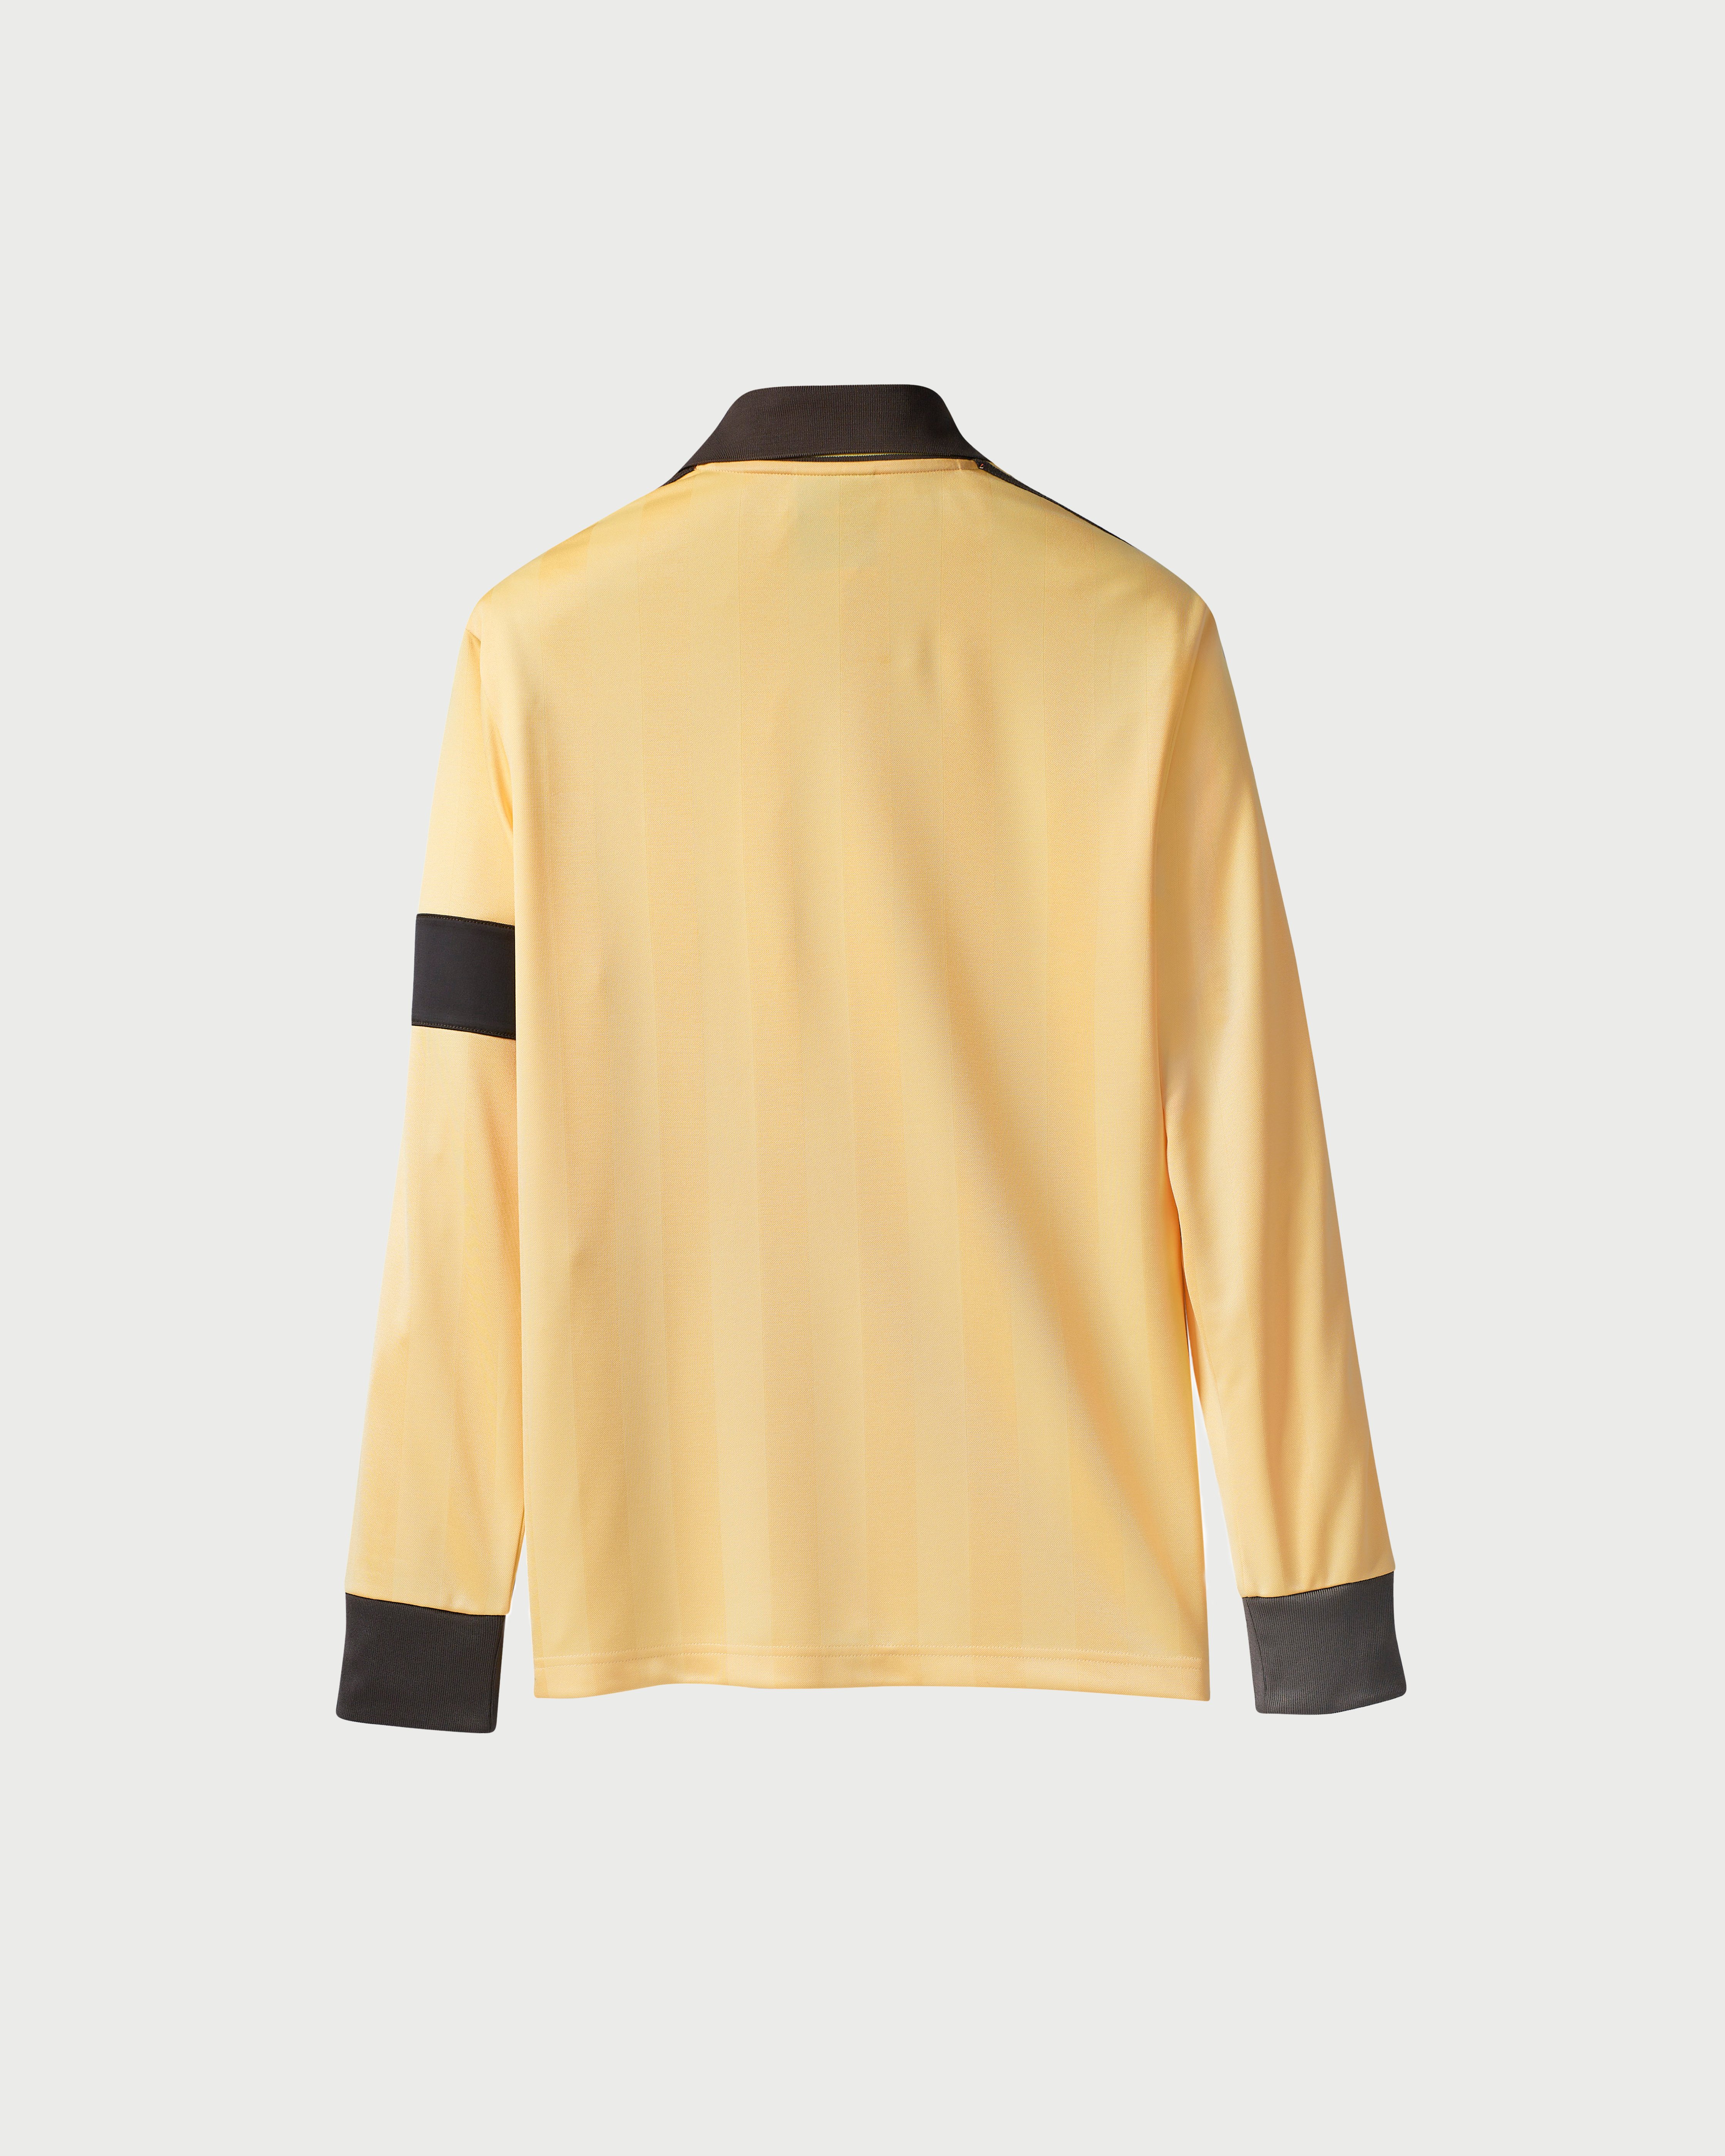 Adidas x Wales Bonner - Football Jersey Orange Tint - Clothing - Yellow - Image 2